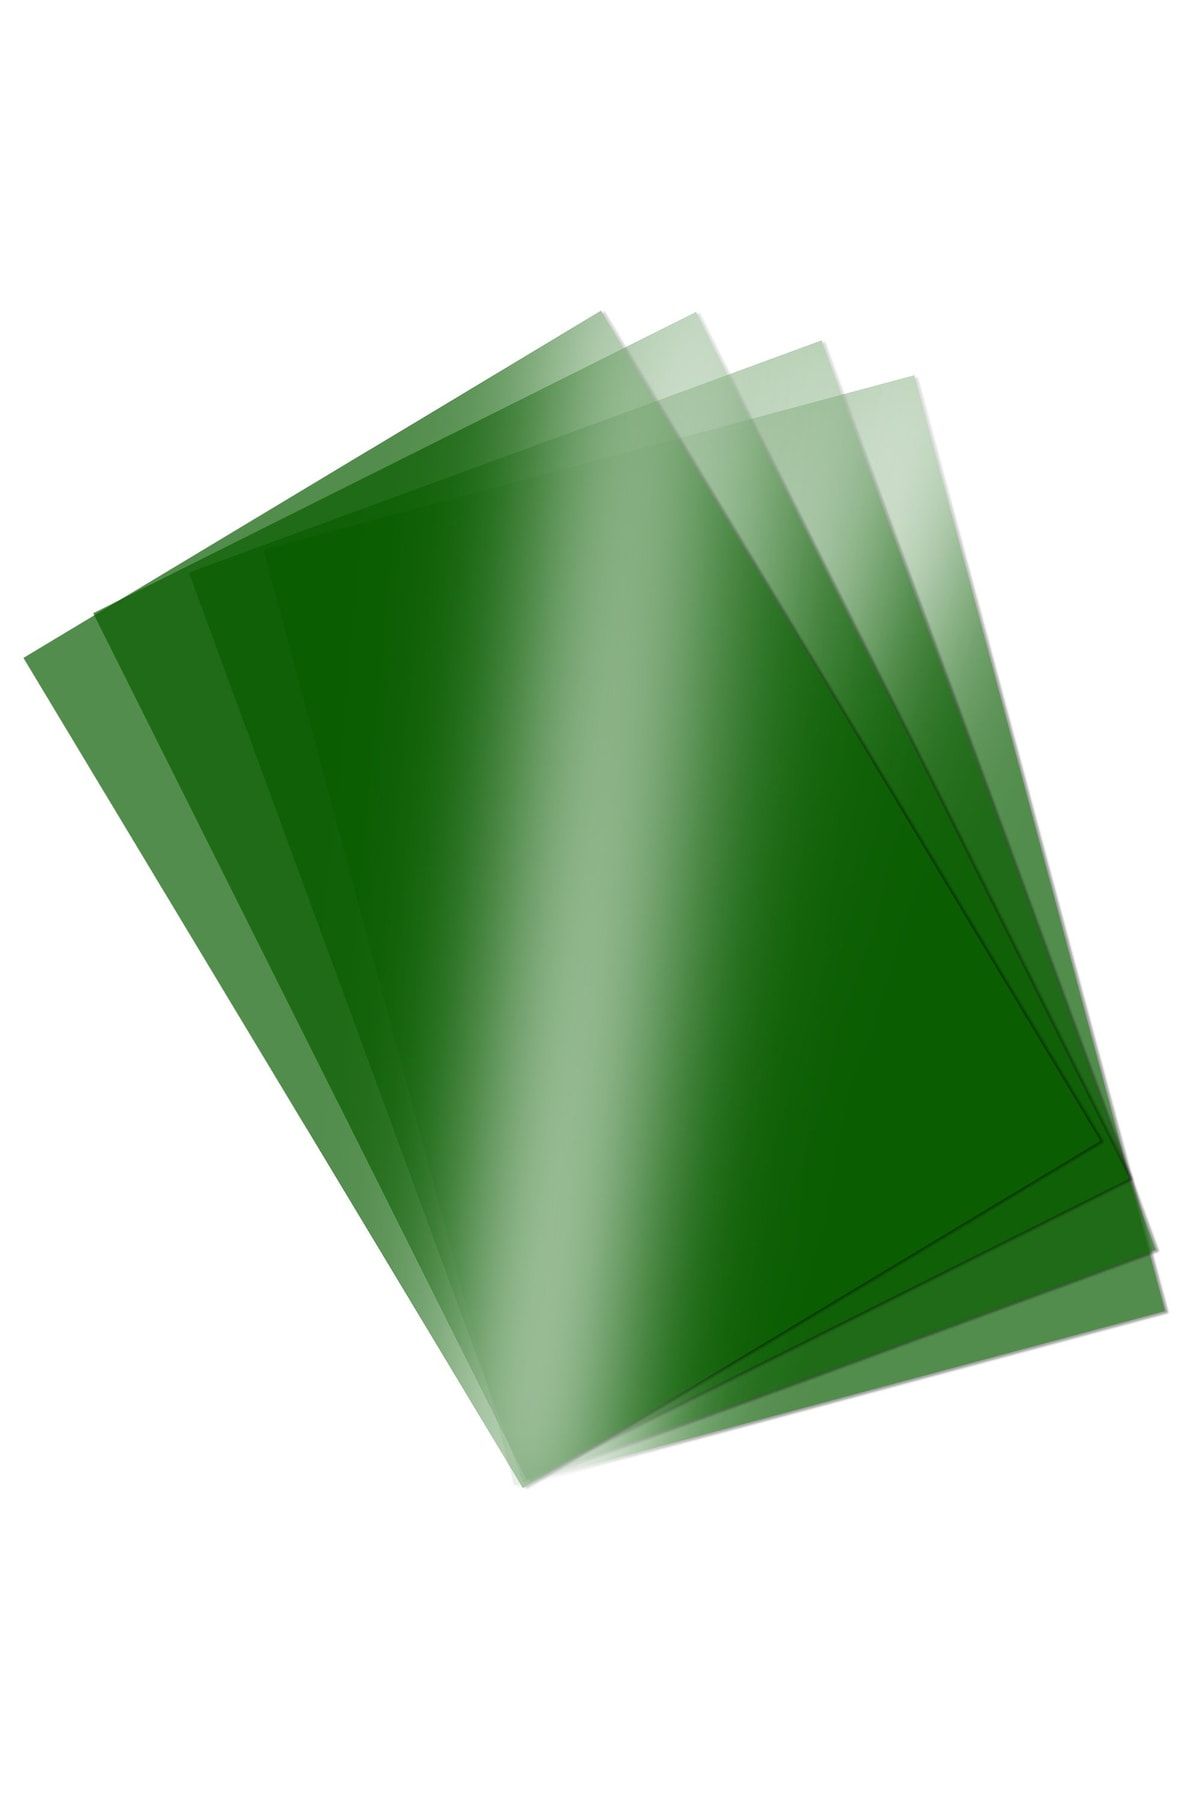 Ümraniye Hobi Sanat Renkli Asetat Kağıdı Pvc 250 Micron A4 Yeşil 5'li